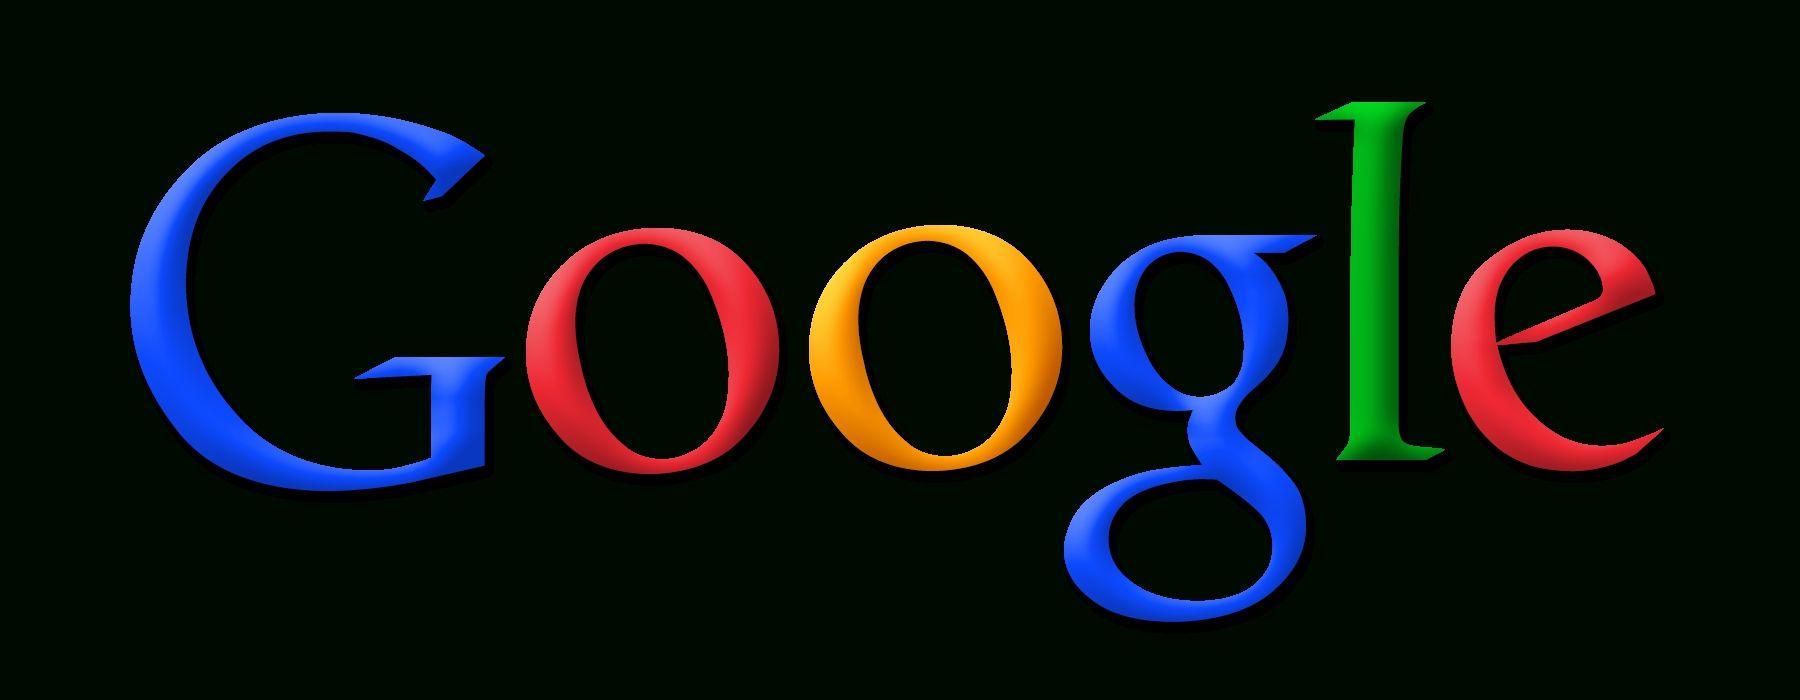 Google Logo Transparent Background. Free Design